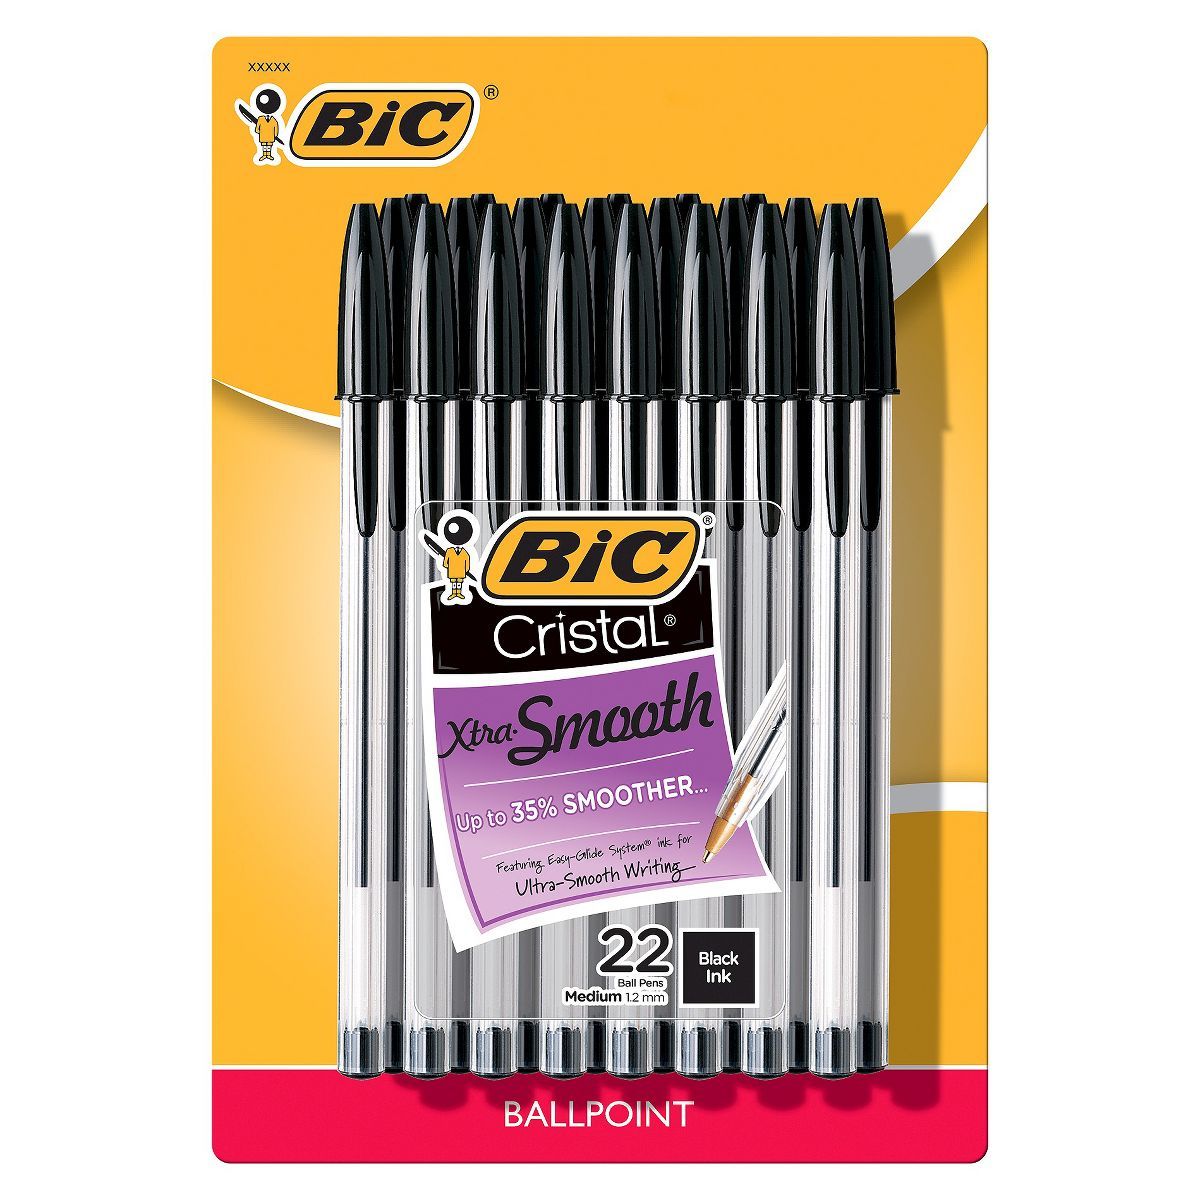 BIC Cristal Xtra Smooth Ballpoint Pens, 1.2mm, 22ct - Black | Target